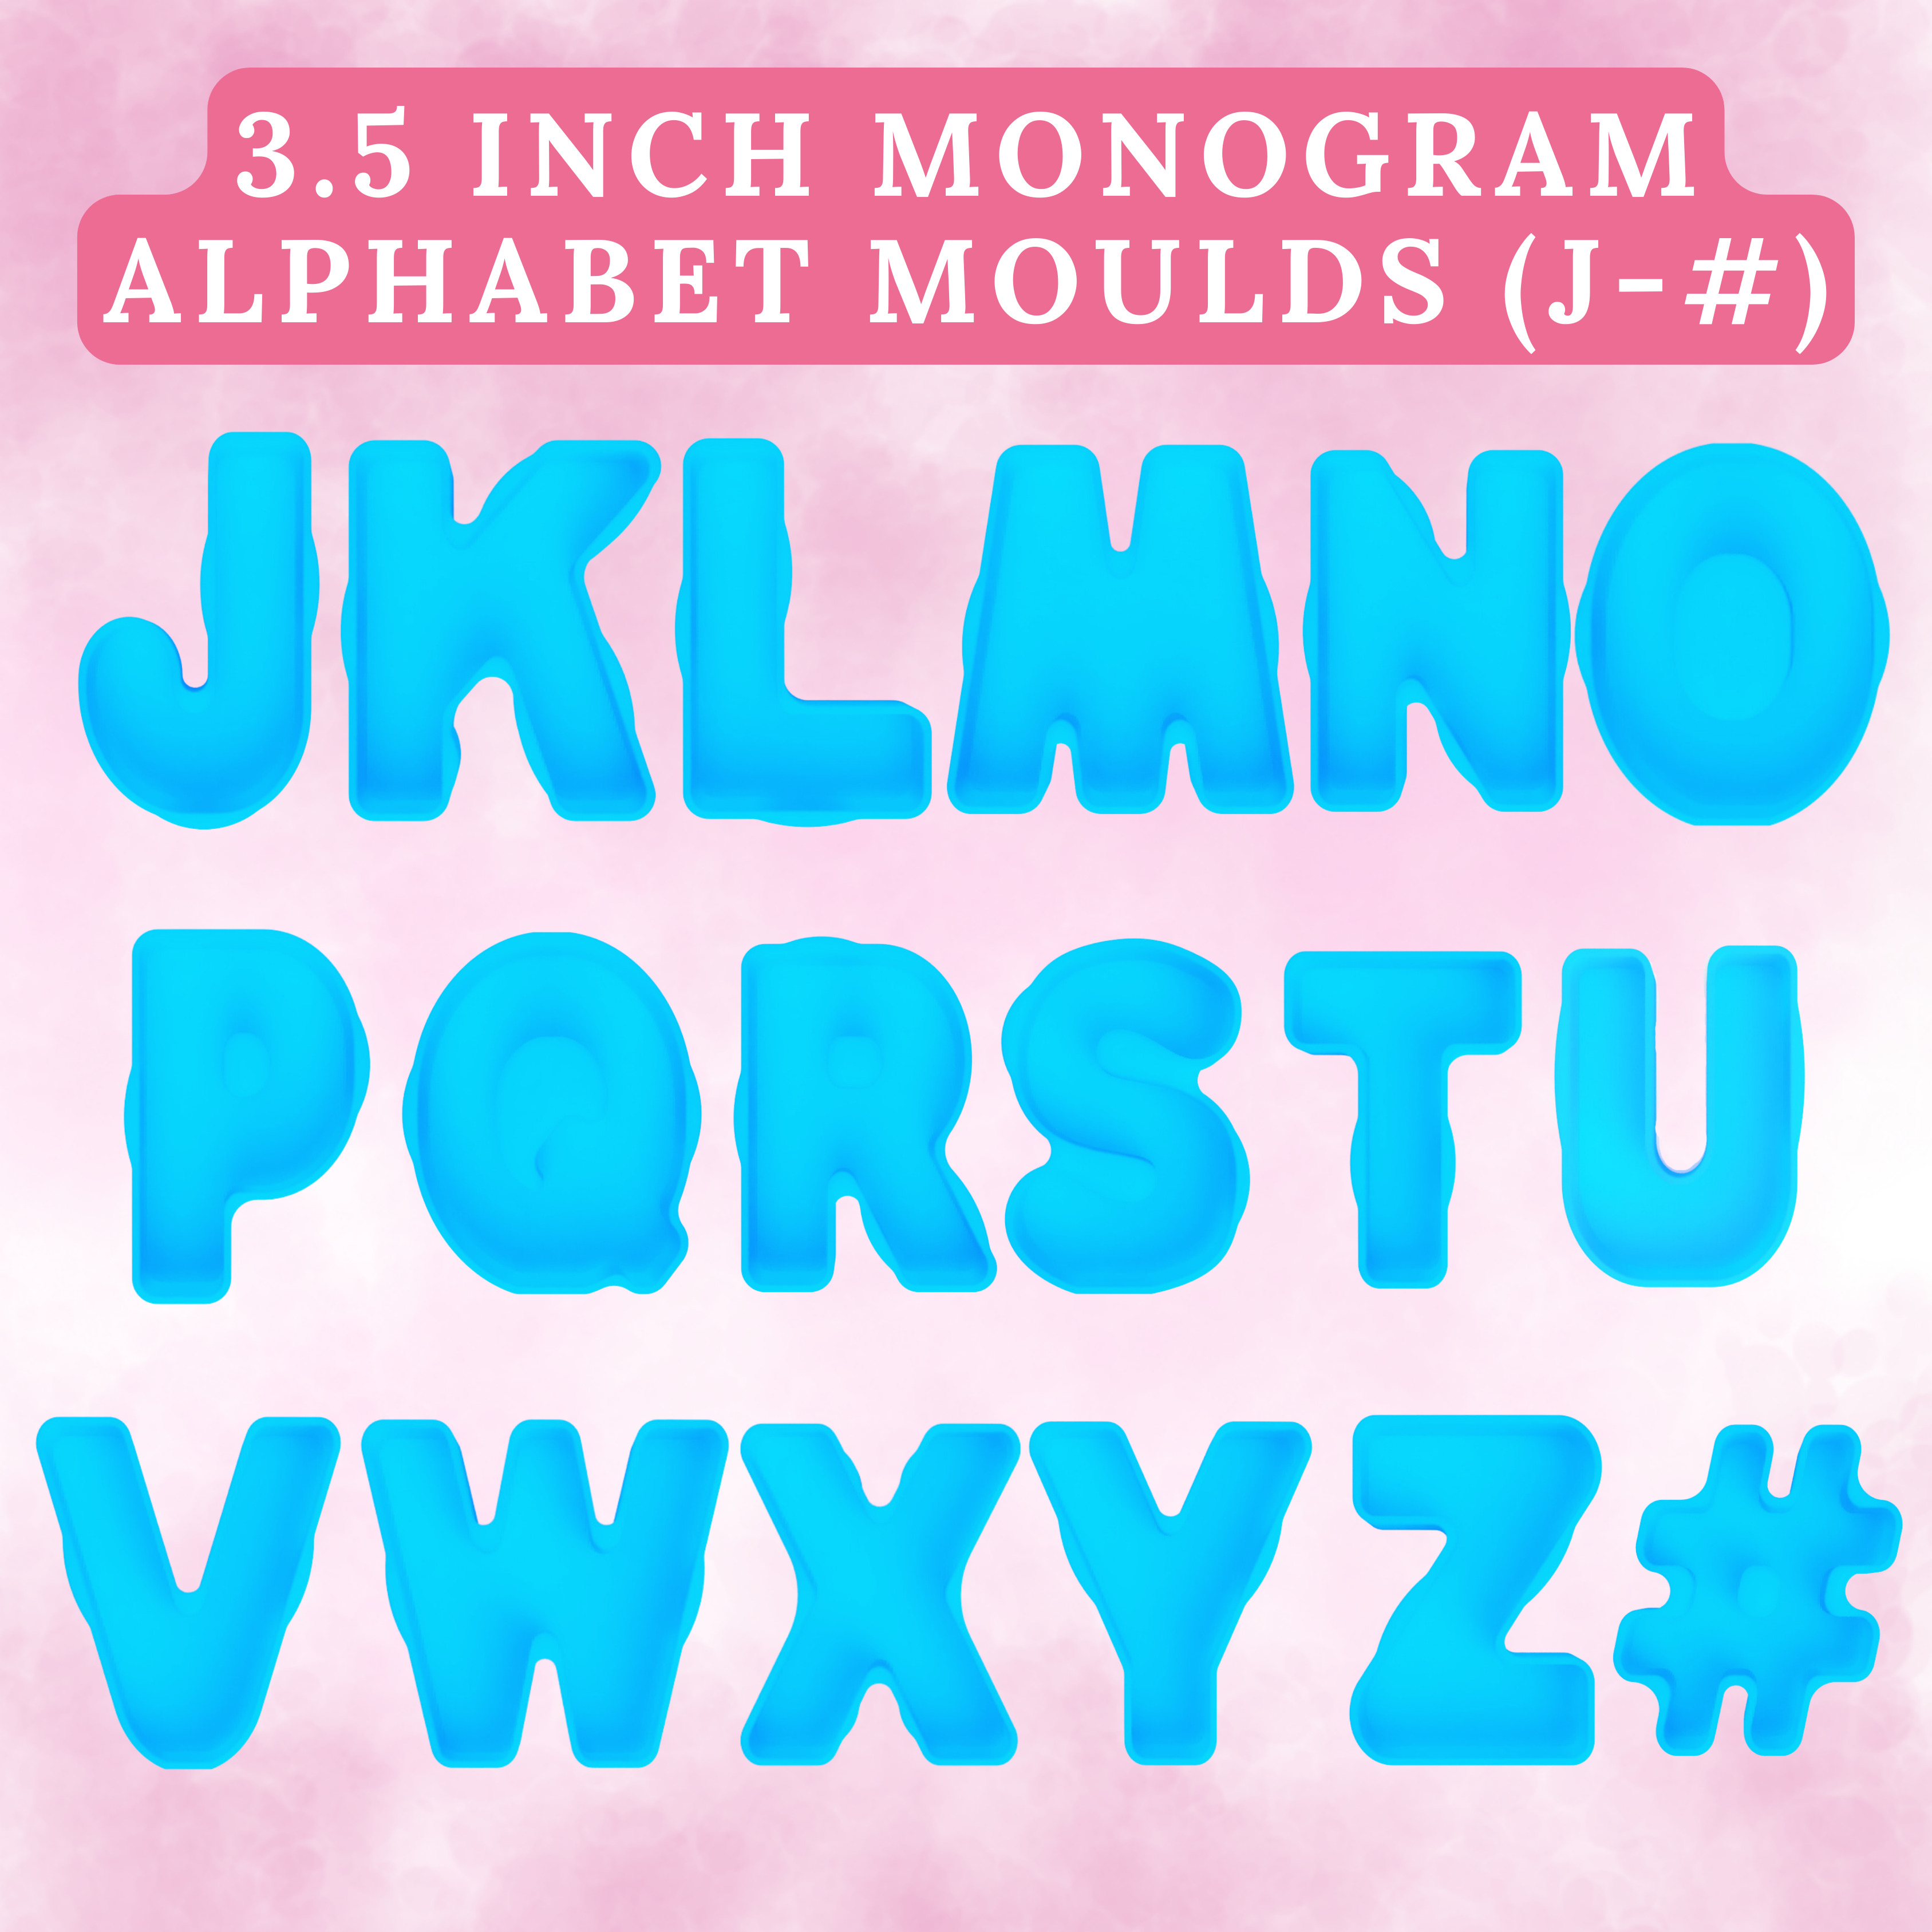 3.5 inch Monogram Alphabet Moulds